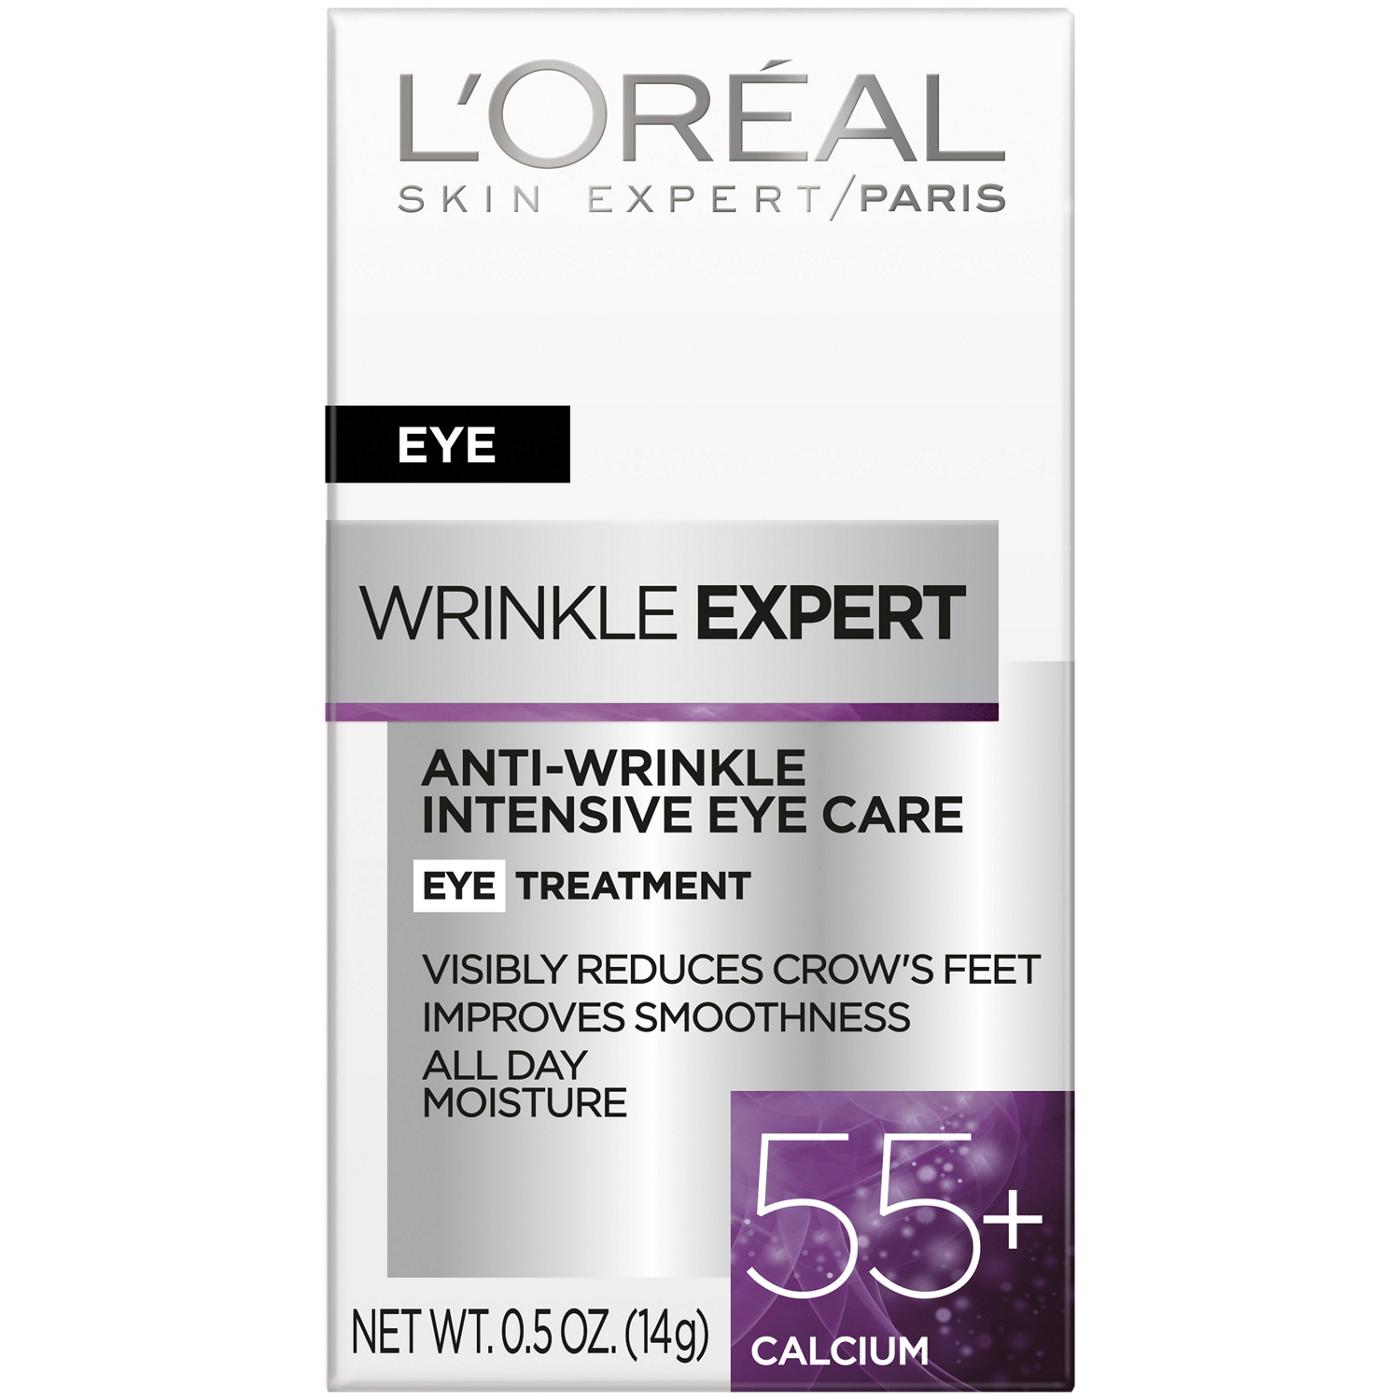 L'Oréal Paris Wrinkle Expert 55+ Anti-Wrinkle Eye Treatment; image 1 of 2